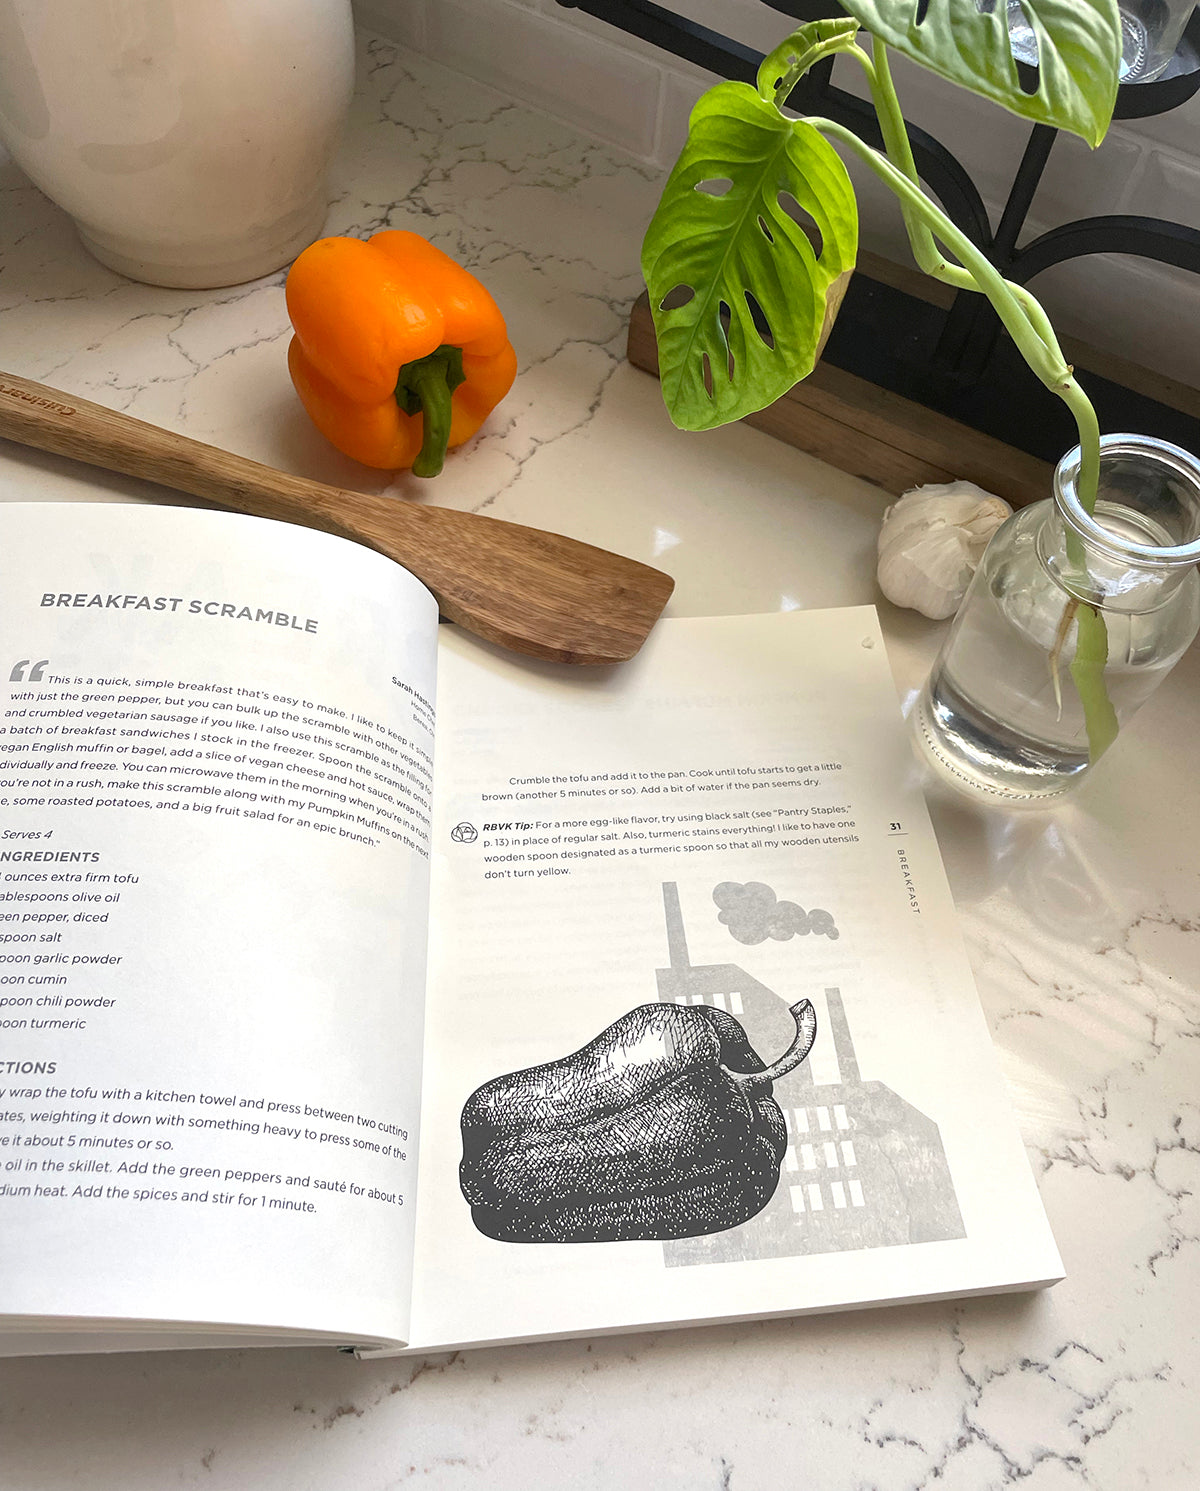 Rust Belt Vegan Kitchen: Recipes, Resources, and Stories